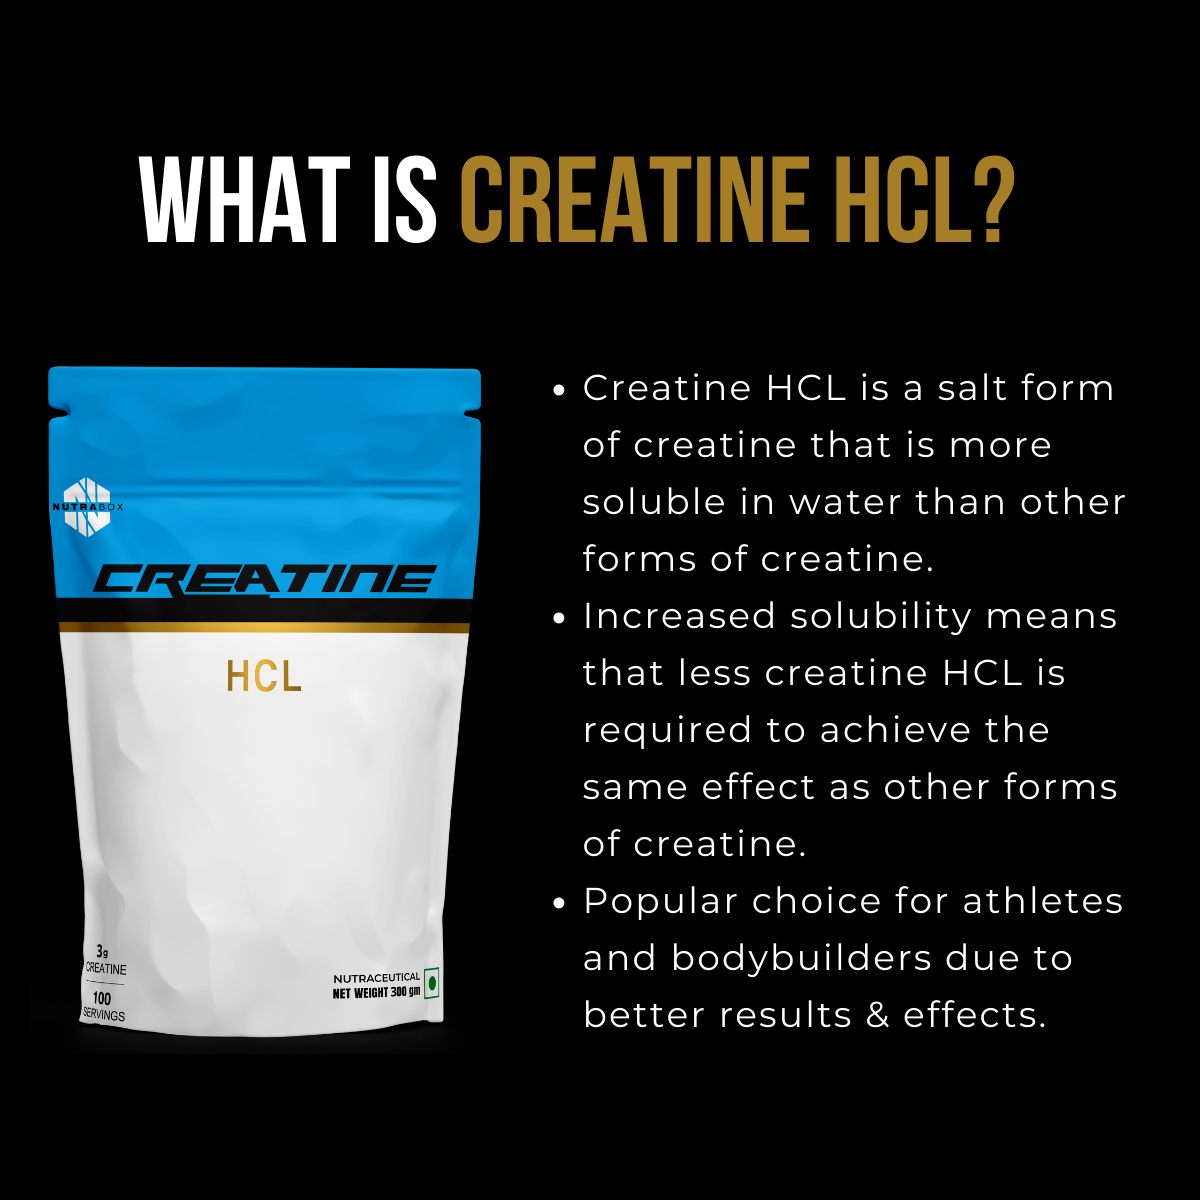 Creatine HCL